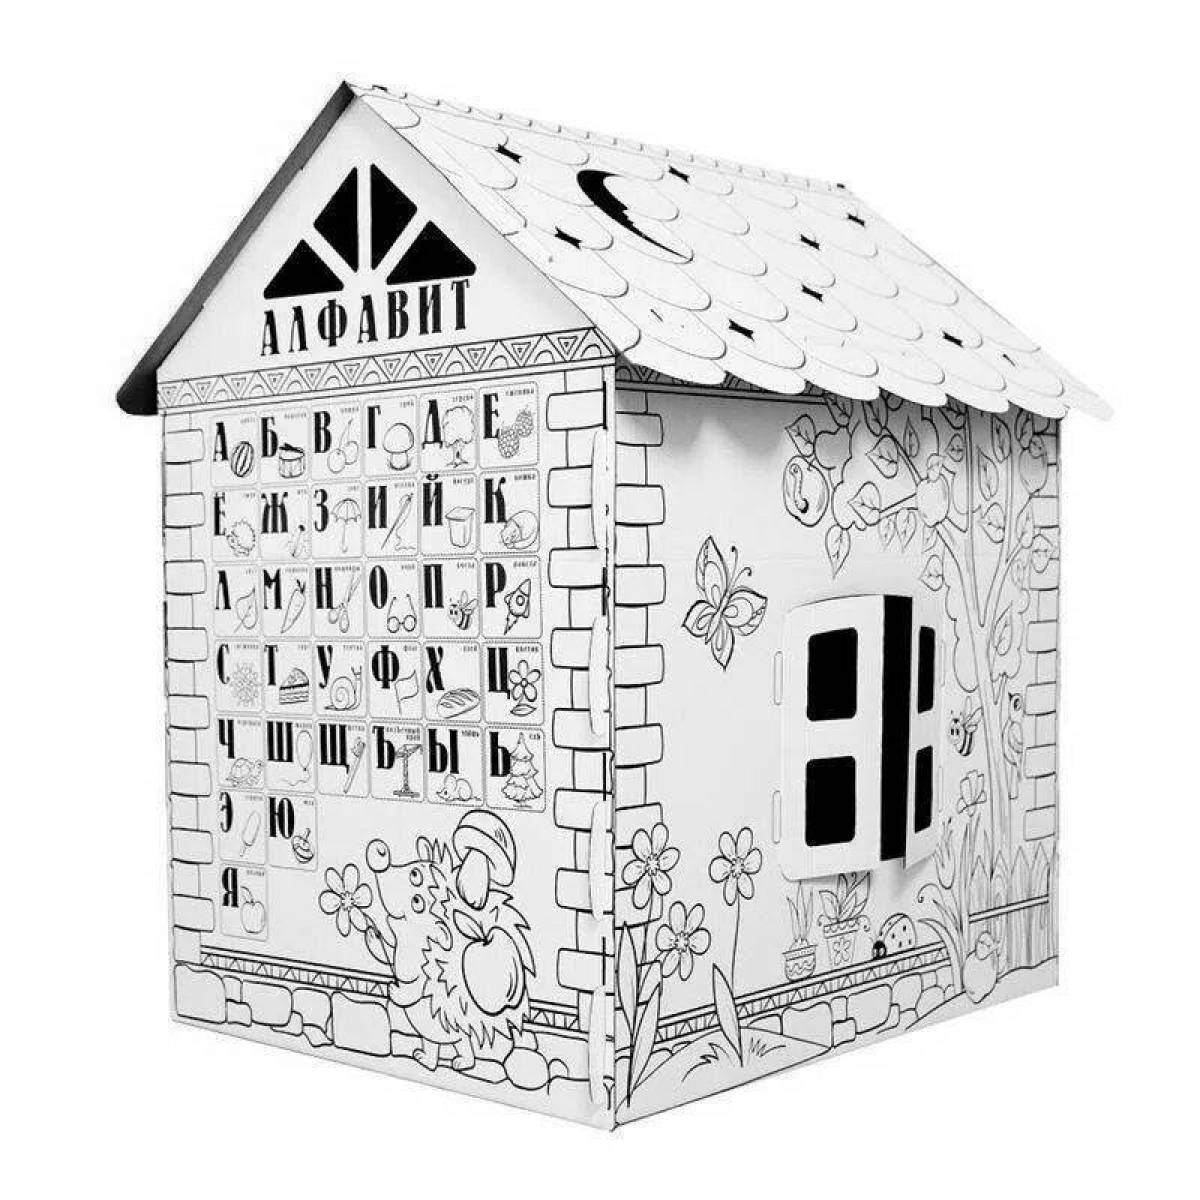 Cardboard house #4